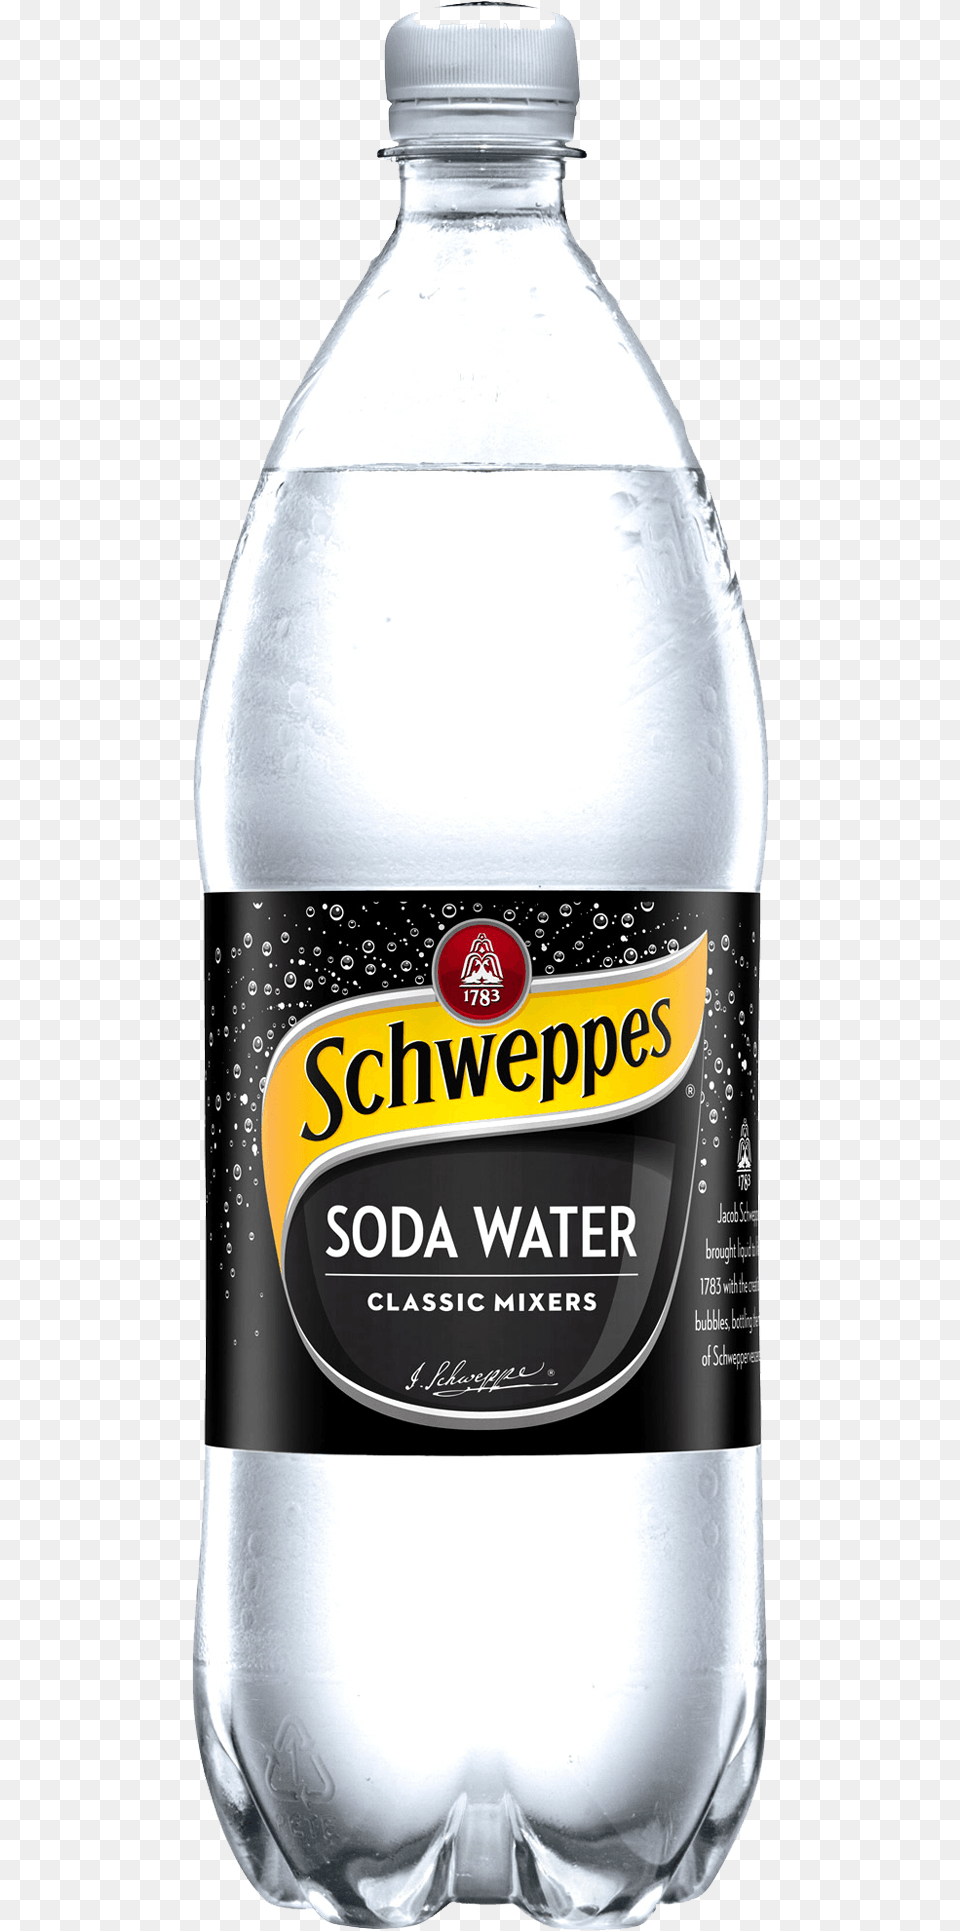 Schweppes Soda Water Schweppes Tonic Water, Bottle, Beverage, Mineral Water, Water Bottle Png